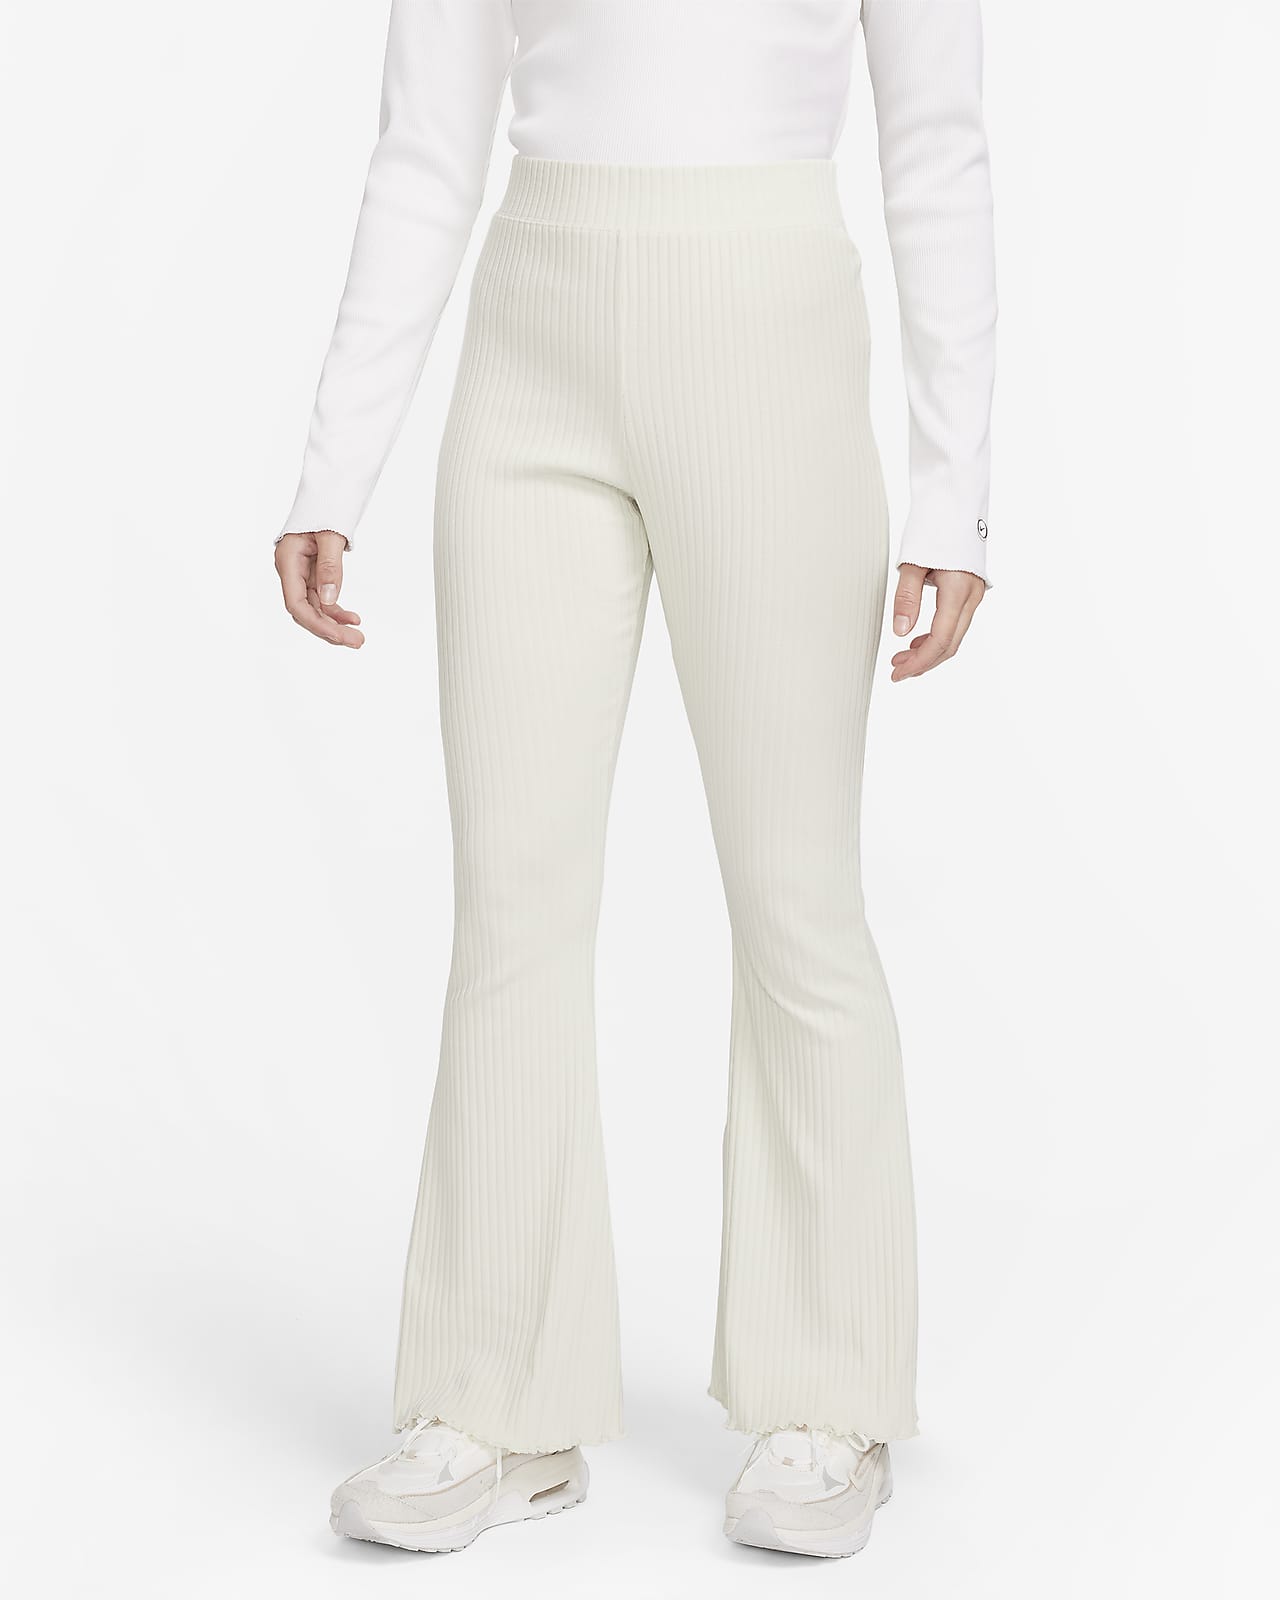 Nike Sportswear SE Women's High-Waisted Full-Length Ribbed Jersey Pants